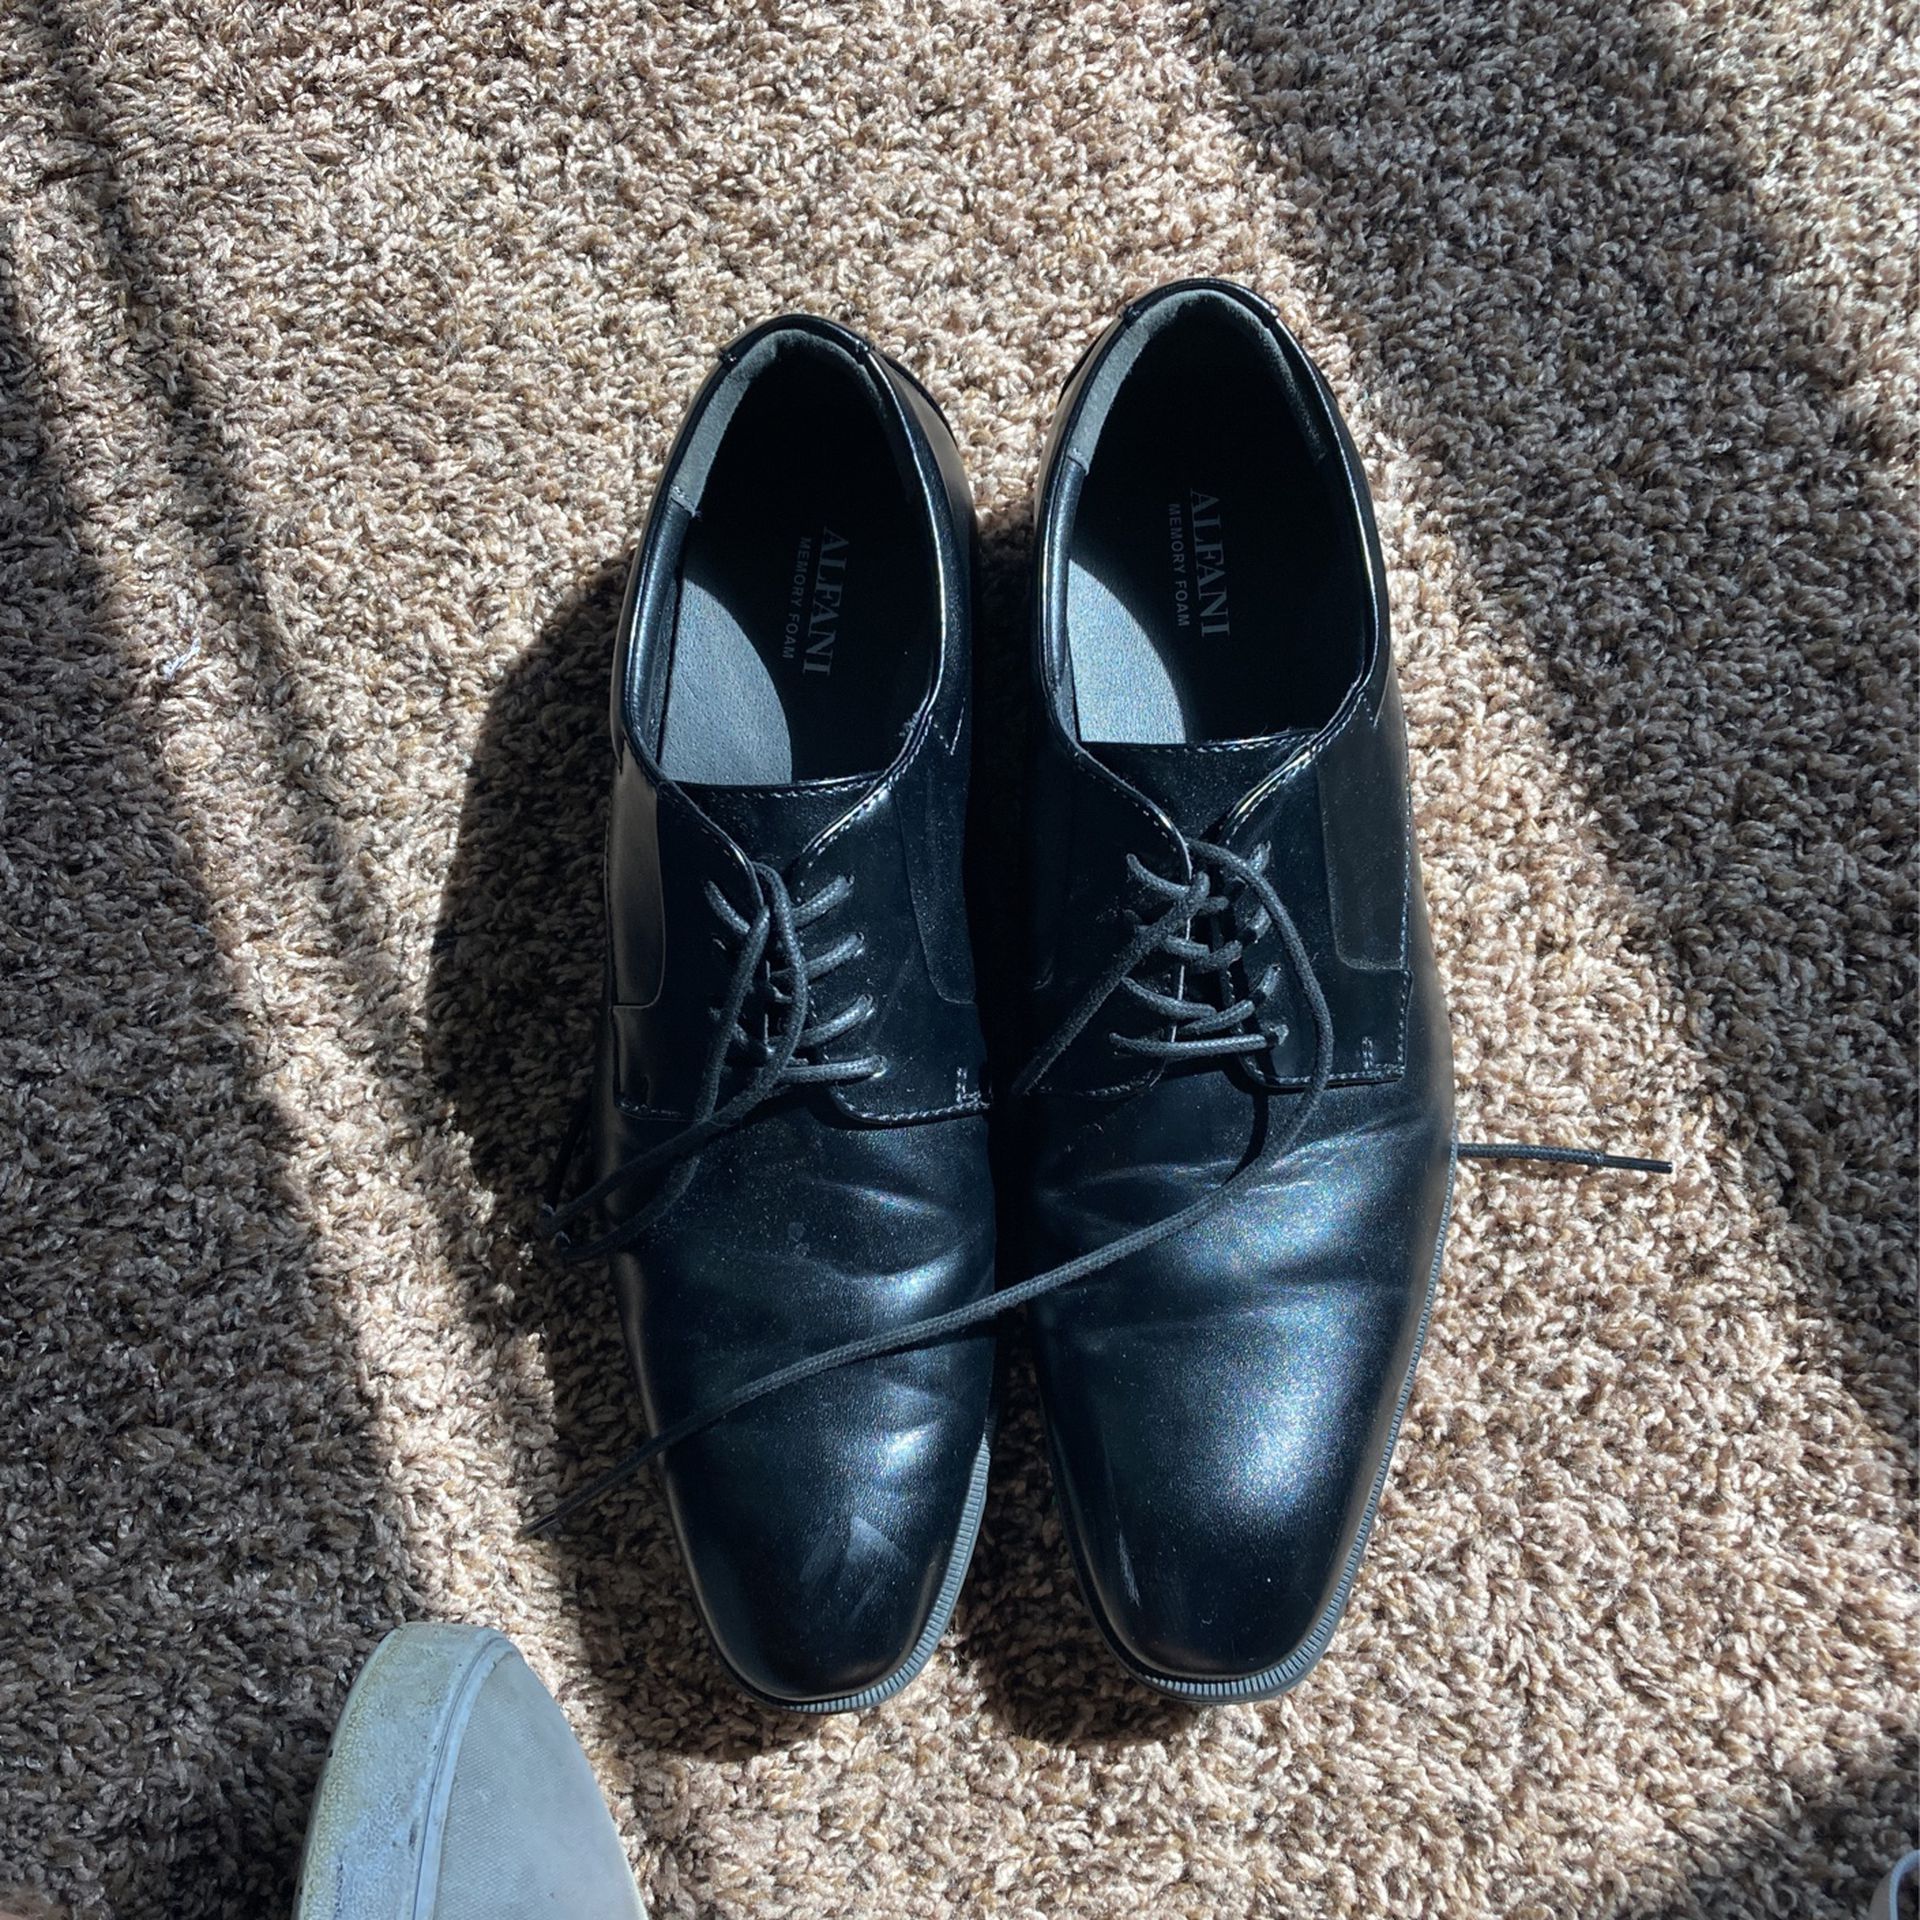 Alfani Black Dress Shoes Size 11